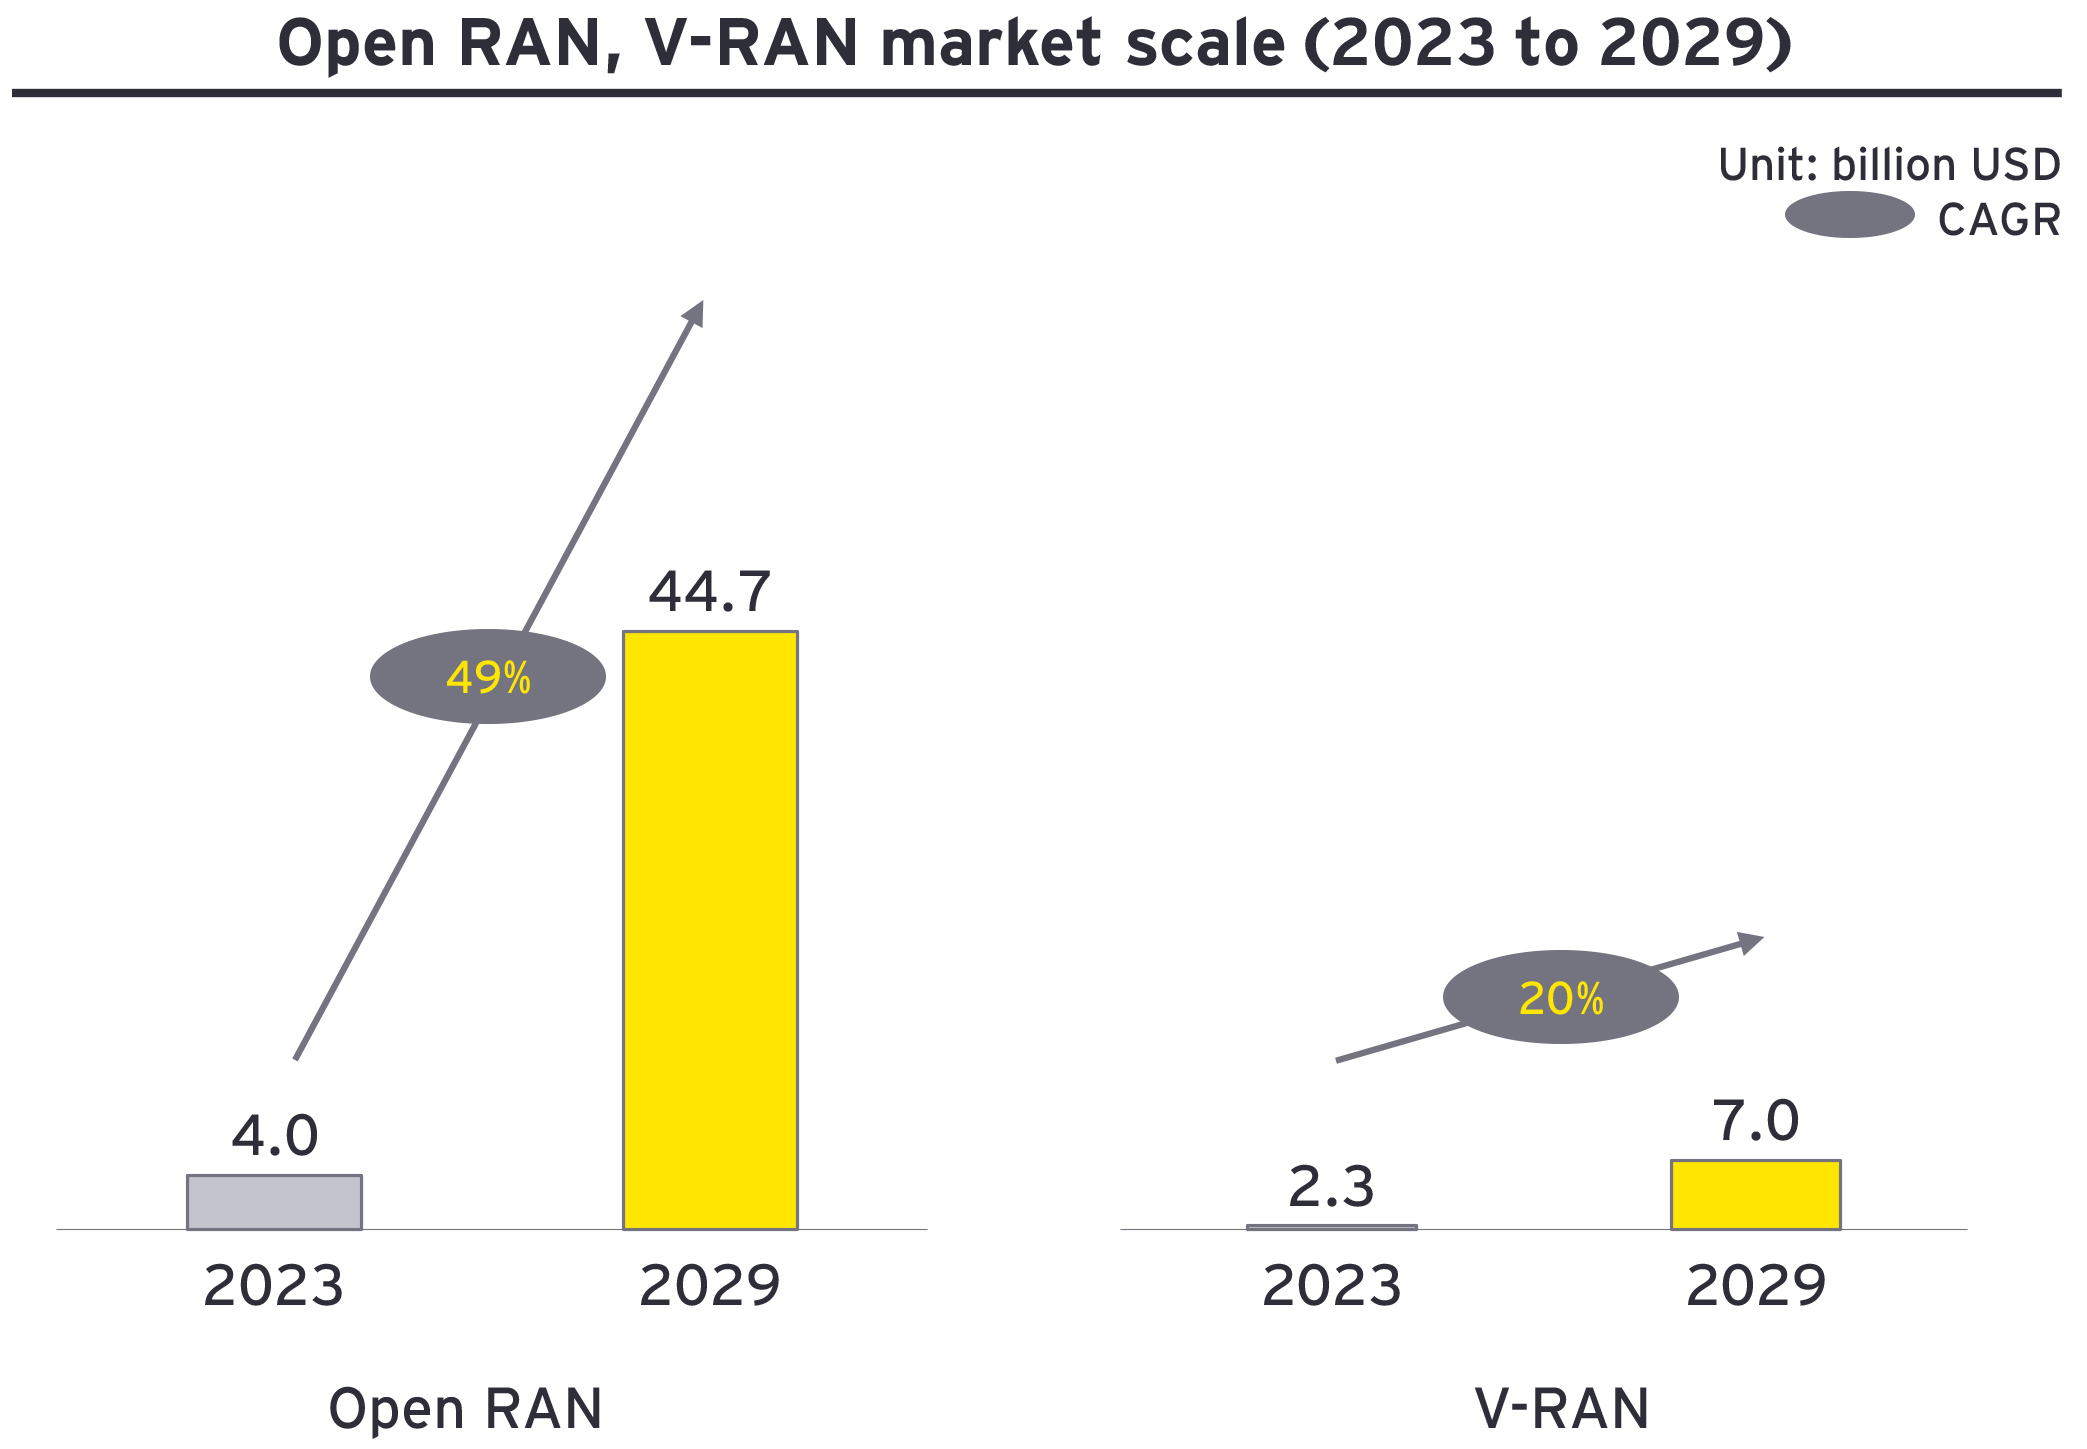 Figure2: Open RAN, V-RAN market scale (2023 to 2029)